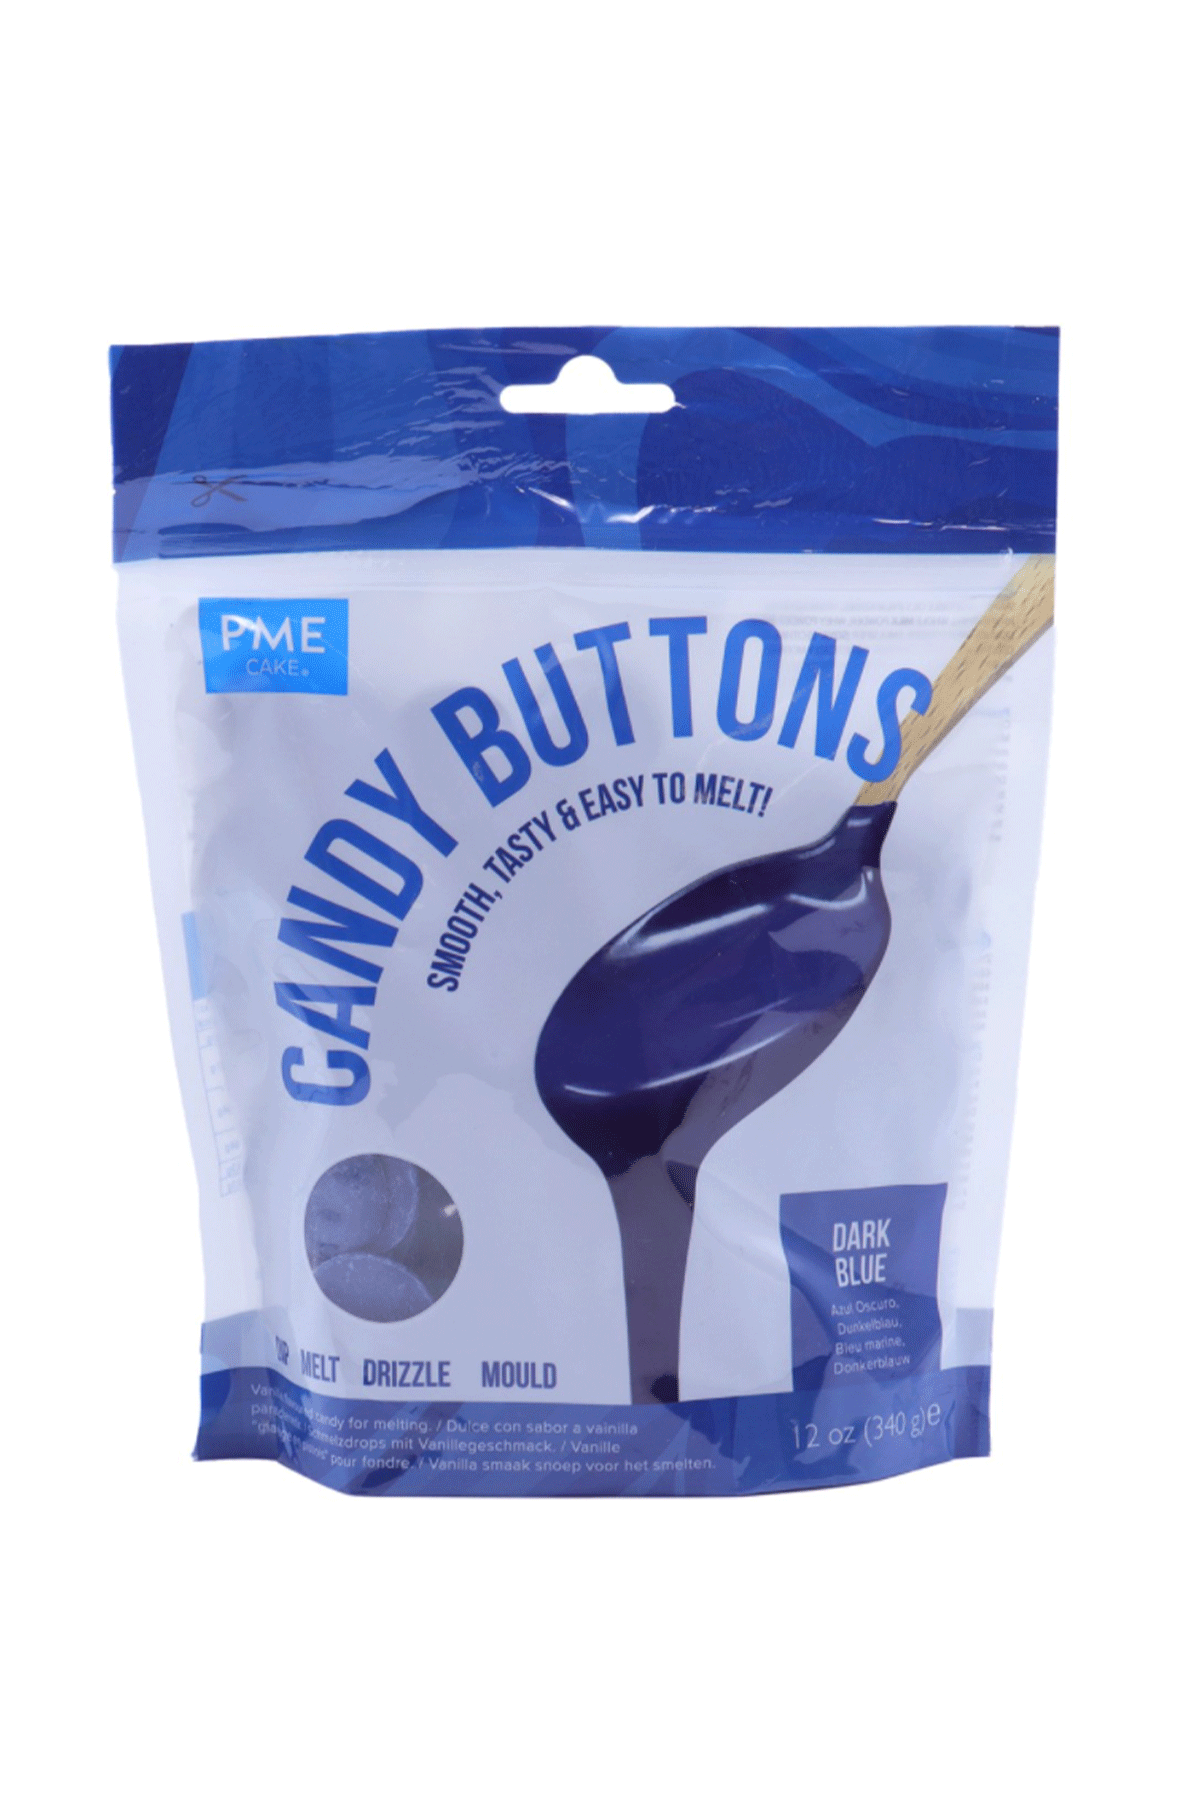 Candy Buttons - Dark Blue (284g/10 oz) PME